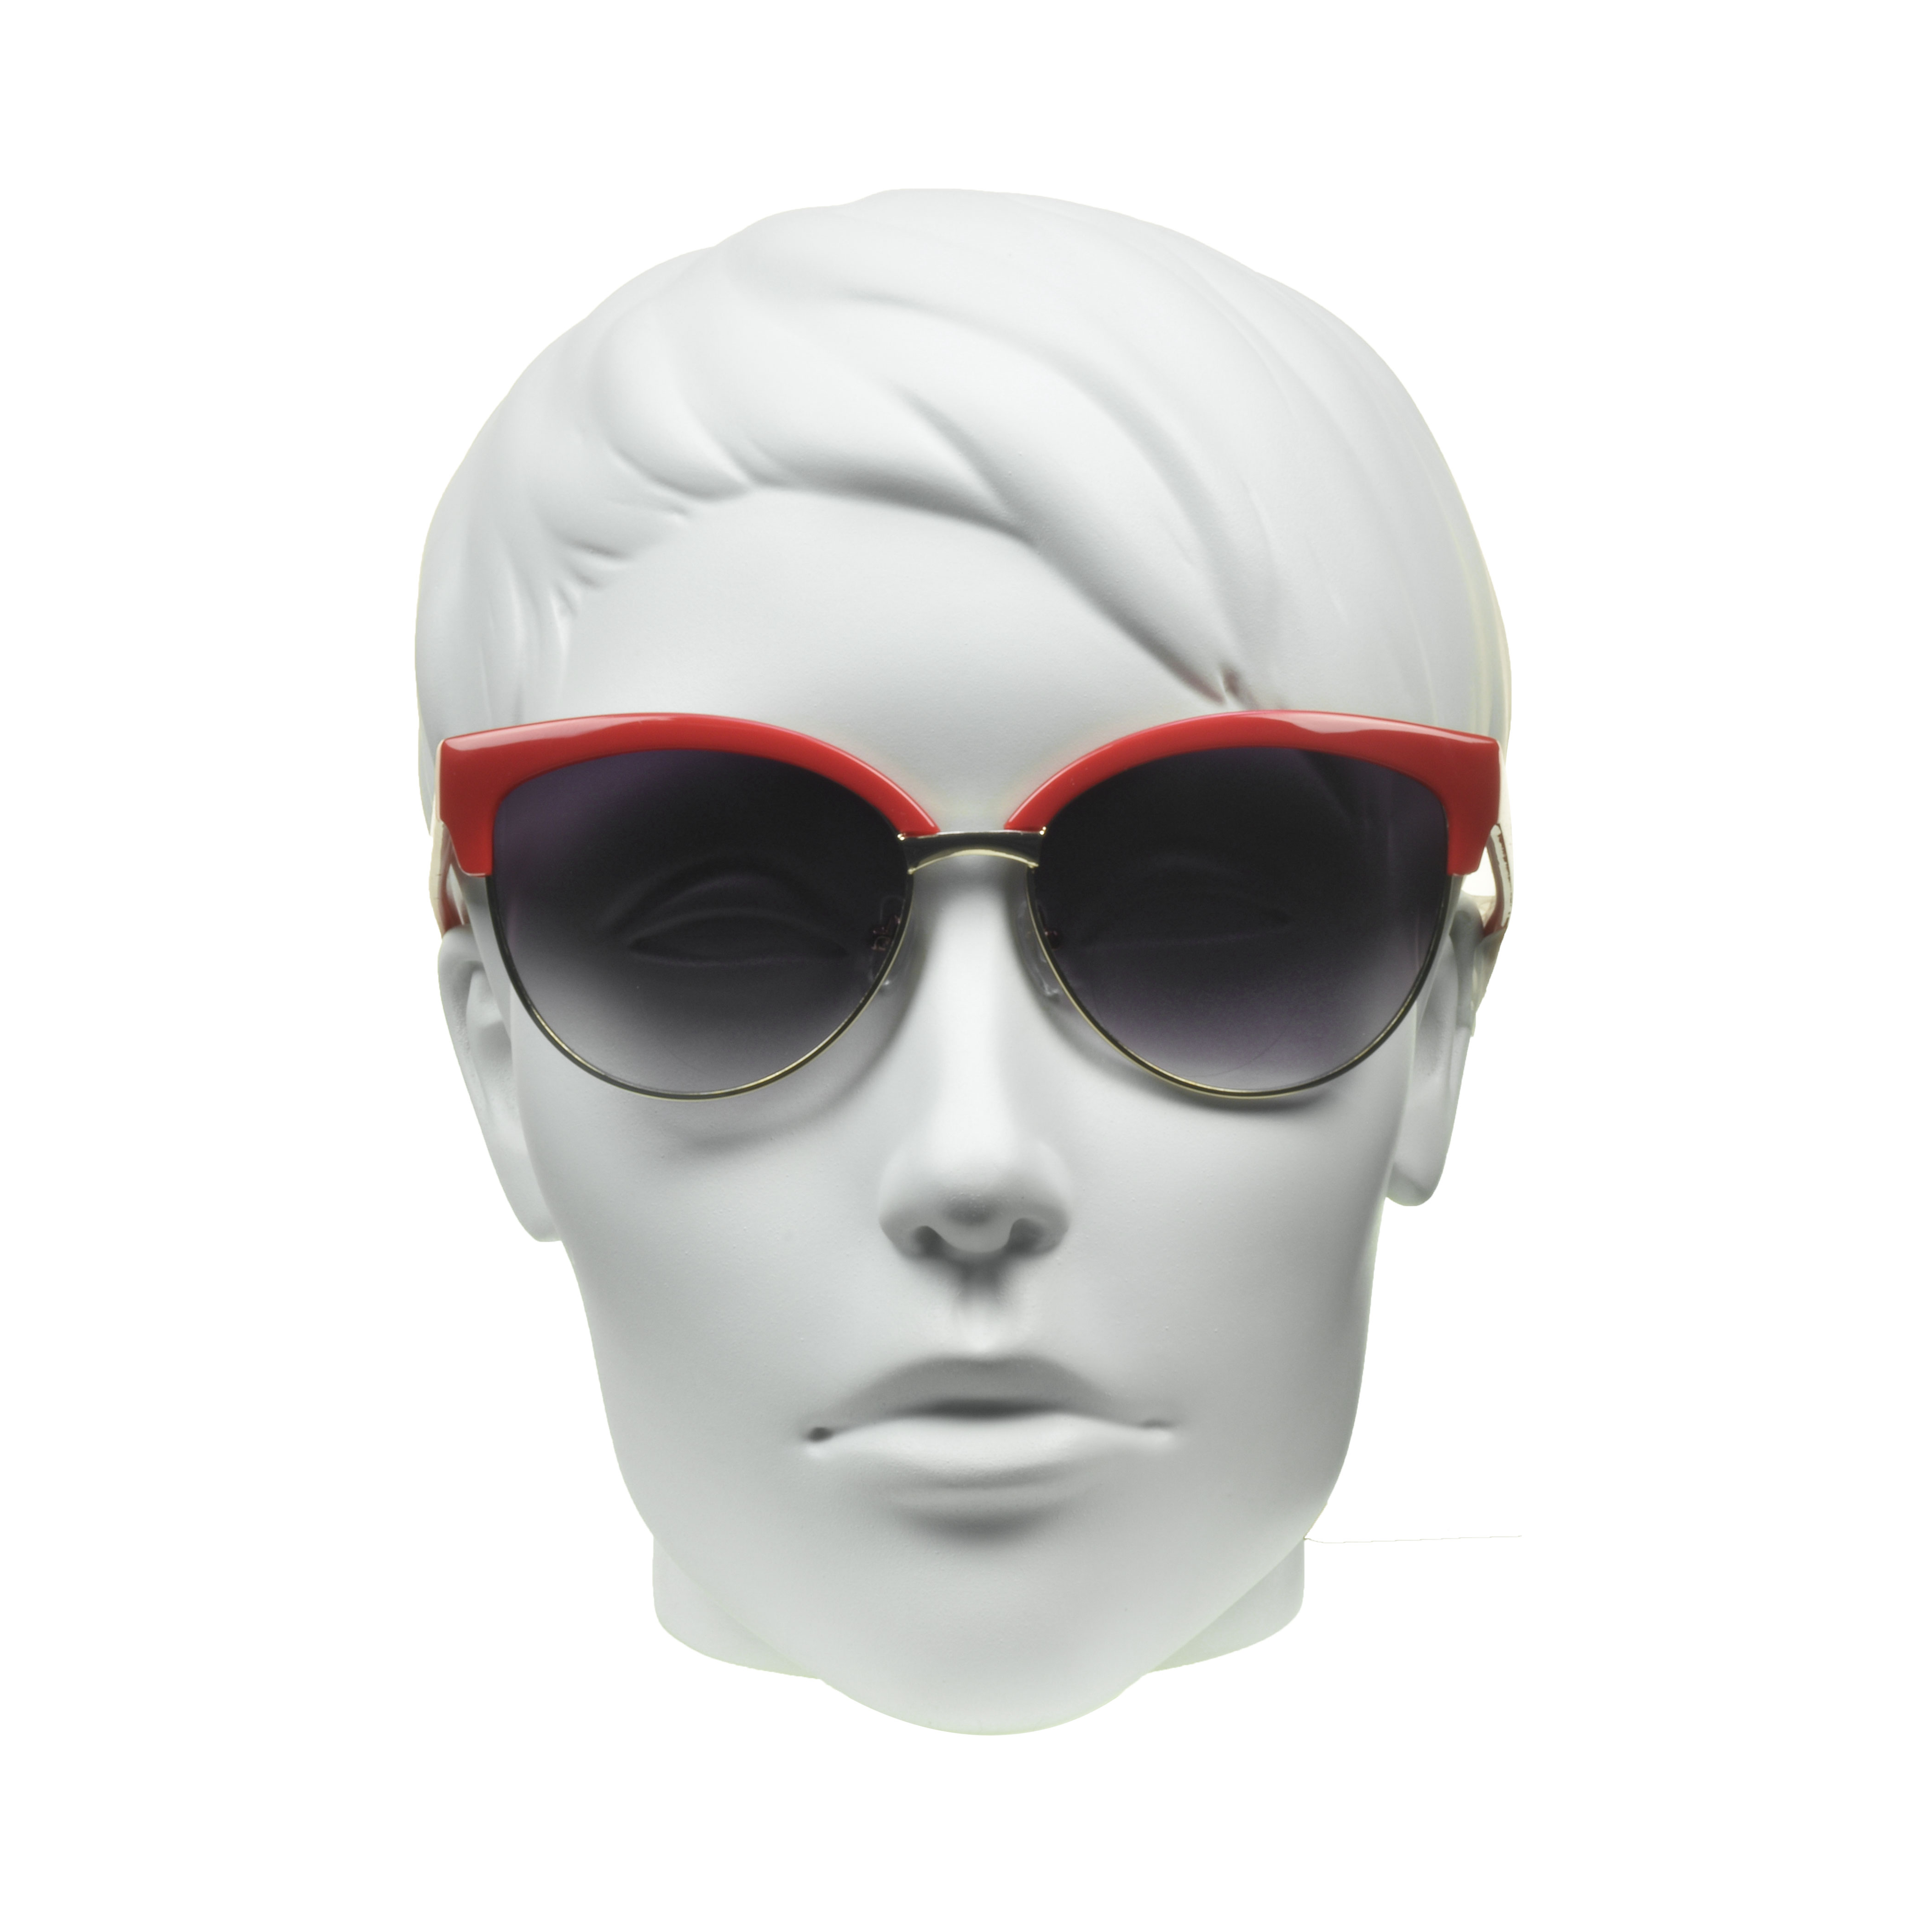 proSPORT Women Bifocal Reading Cateye Fashion Horn Rim Sunglasses Red Gold Frame Smoke Lens +3.00 - image 3 of 5